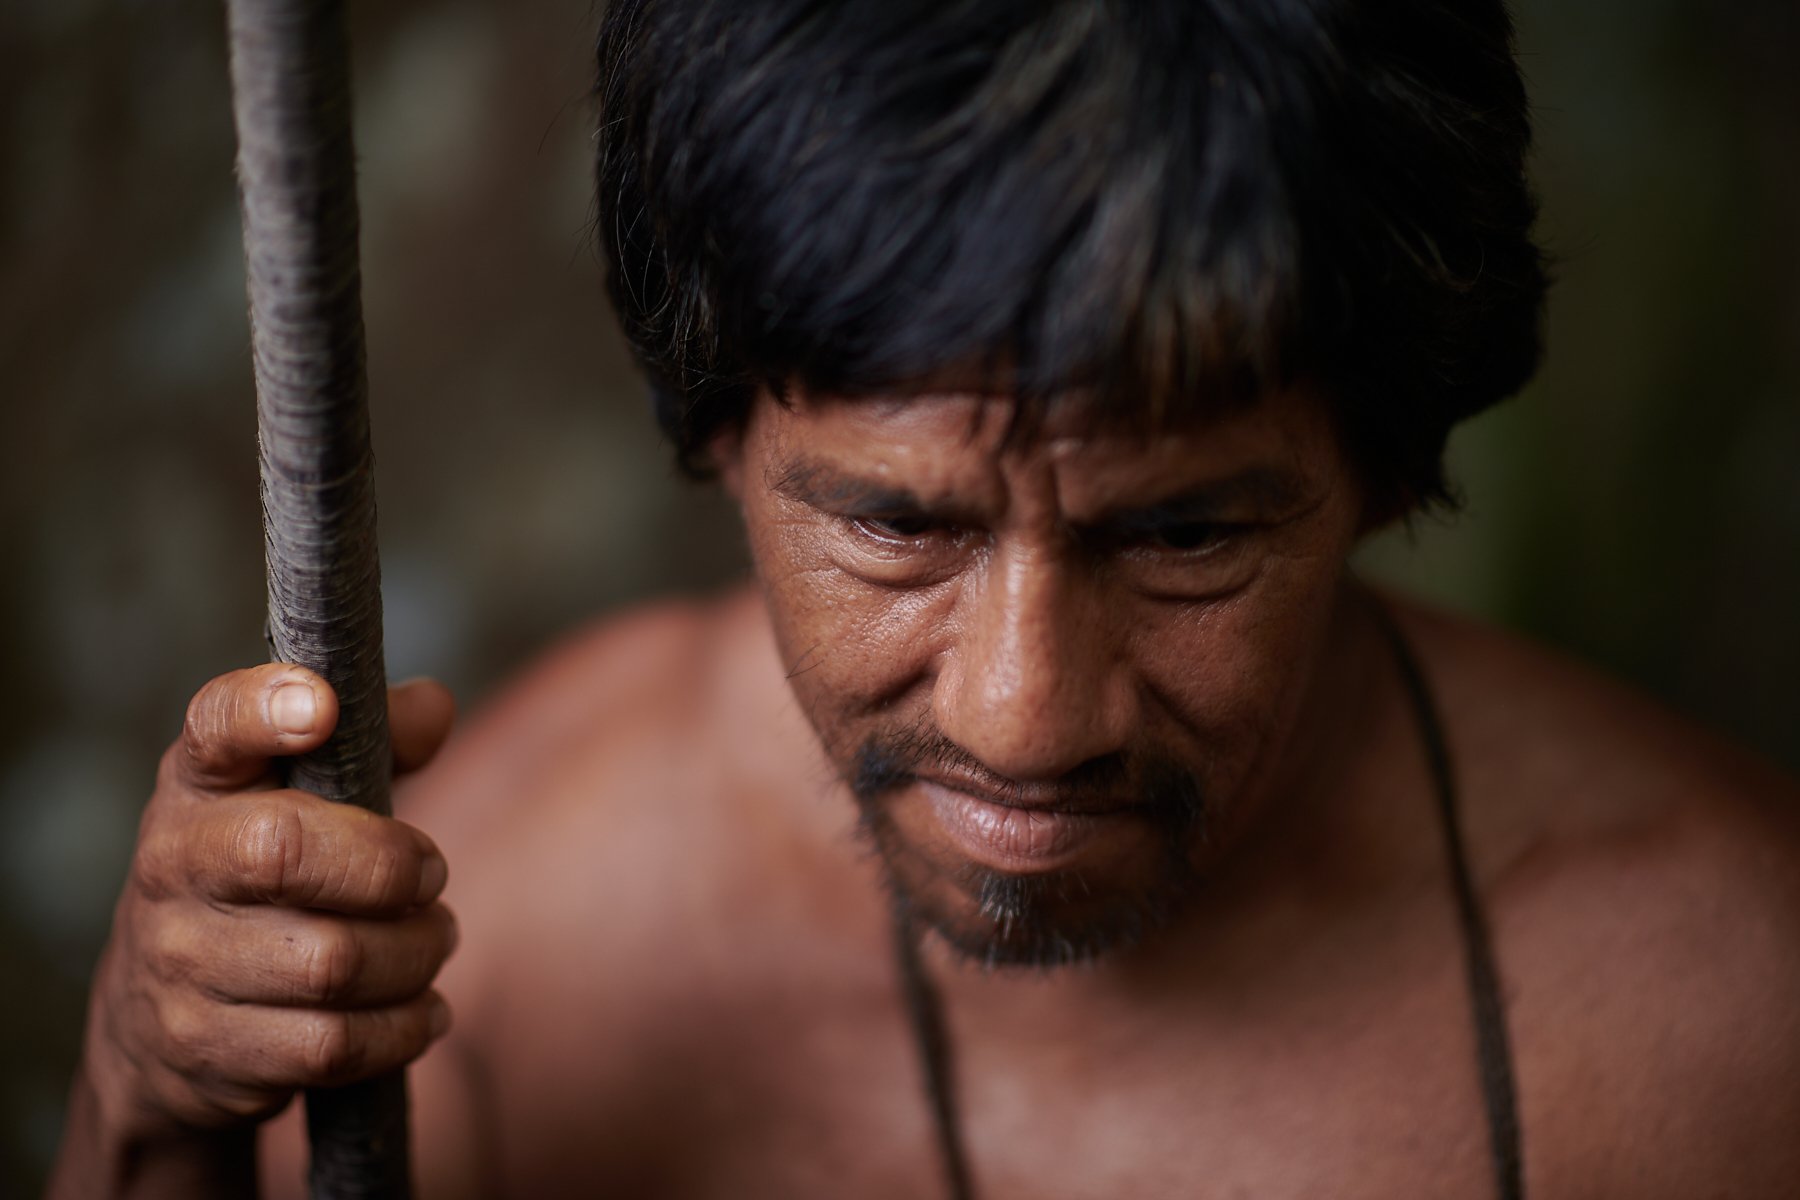 Amo, one of the strongest Huaorani warriors